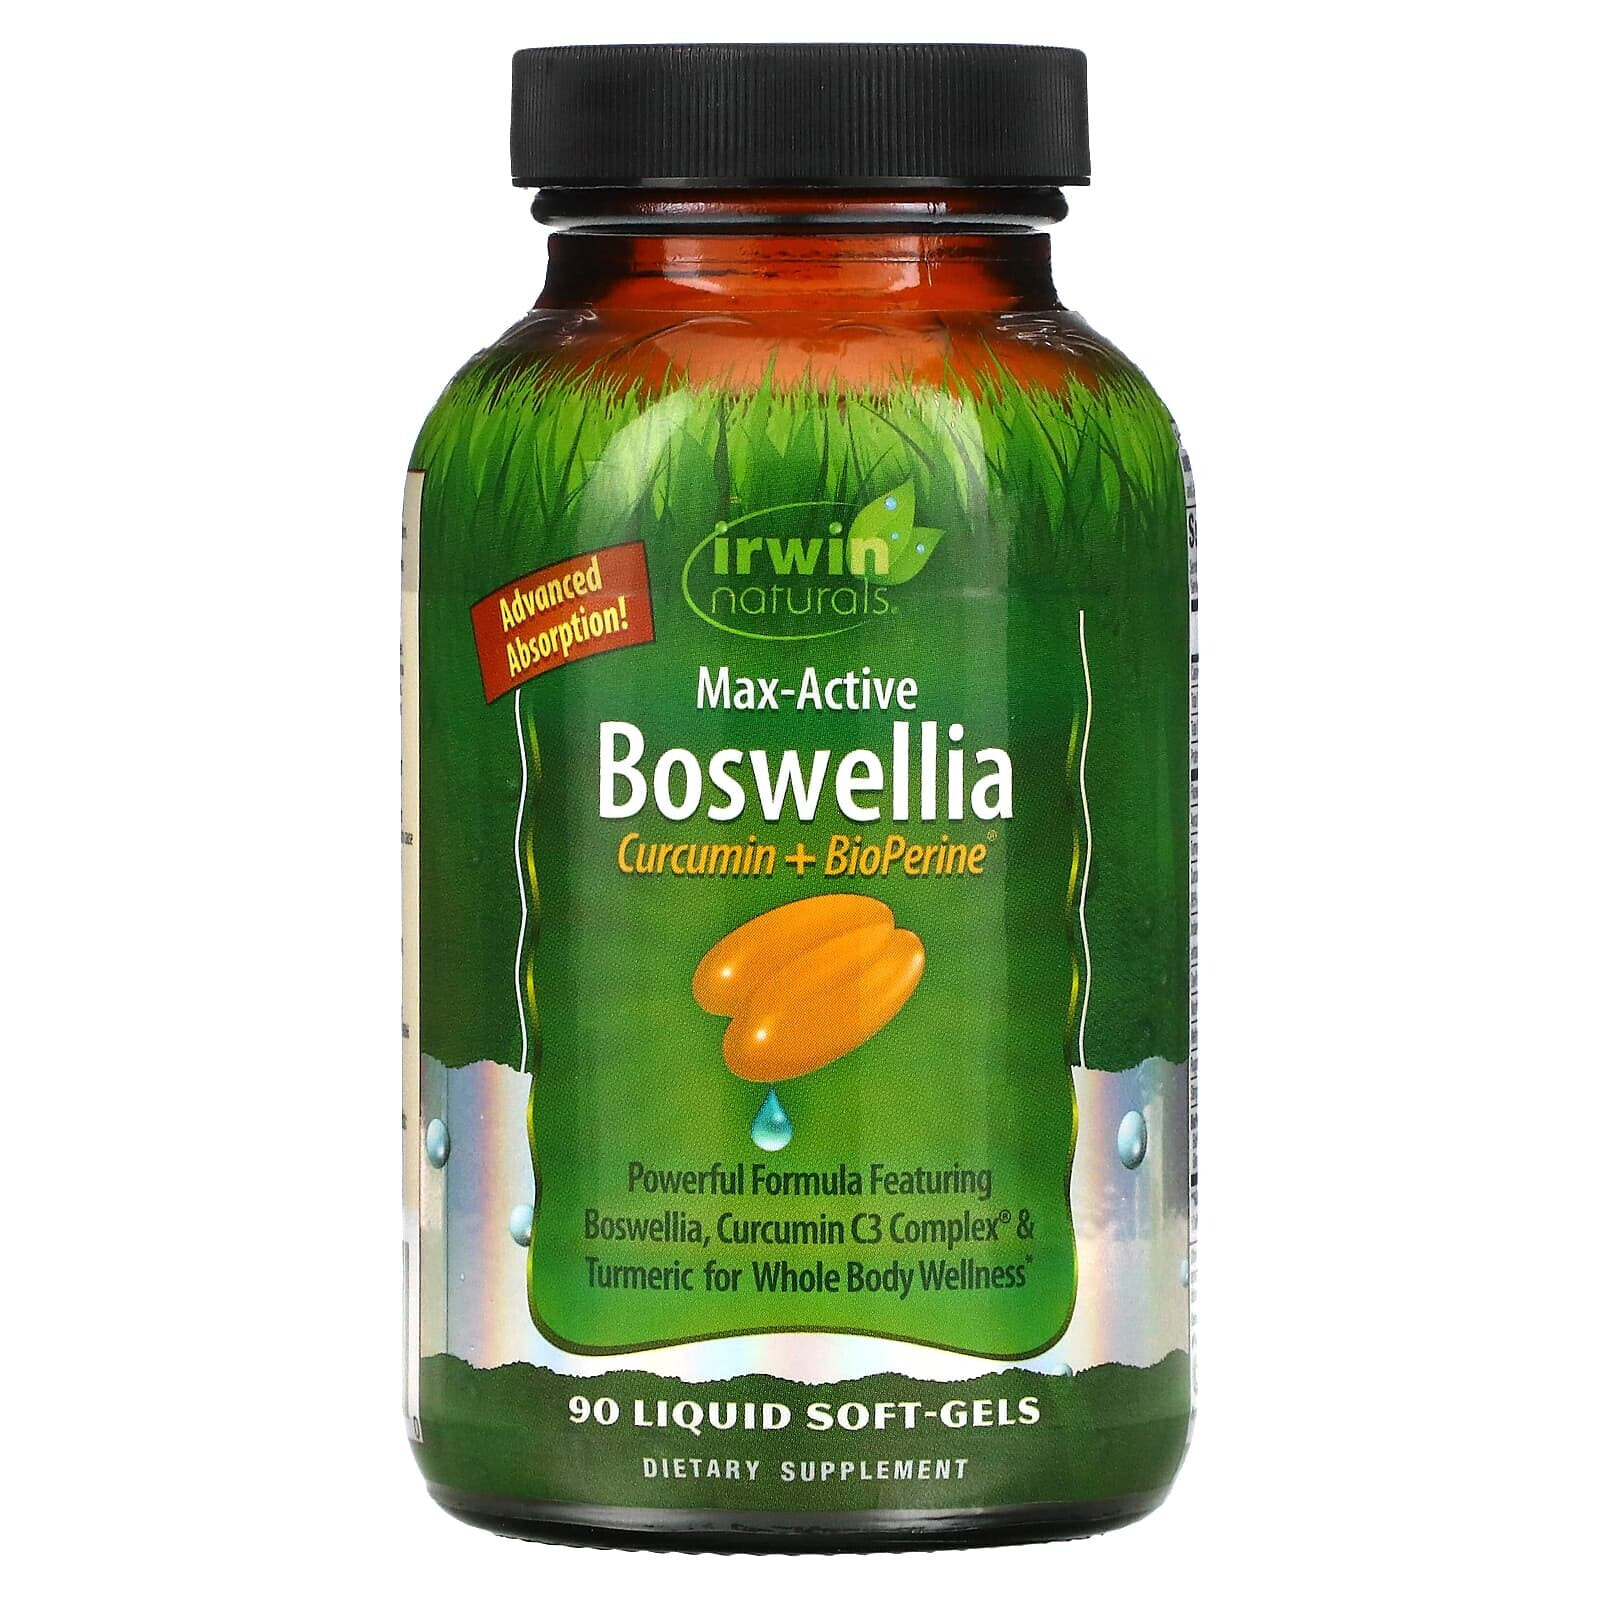 Max-Active Boswellia, Curcumin + BioPerine, 90 Liquid Soft-Gels